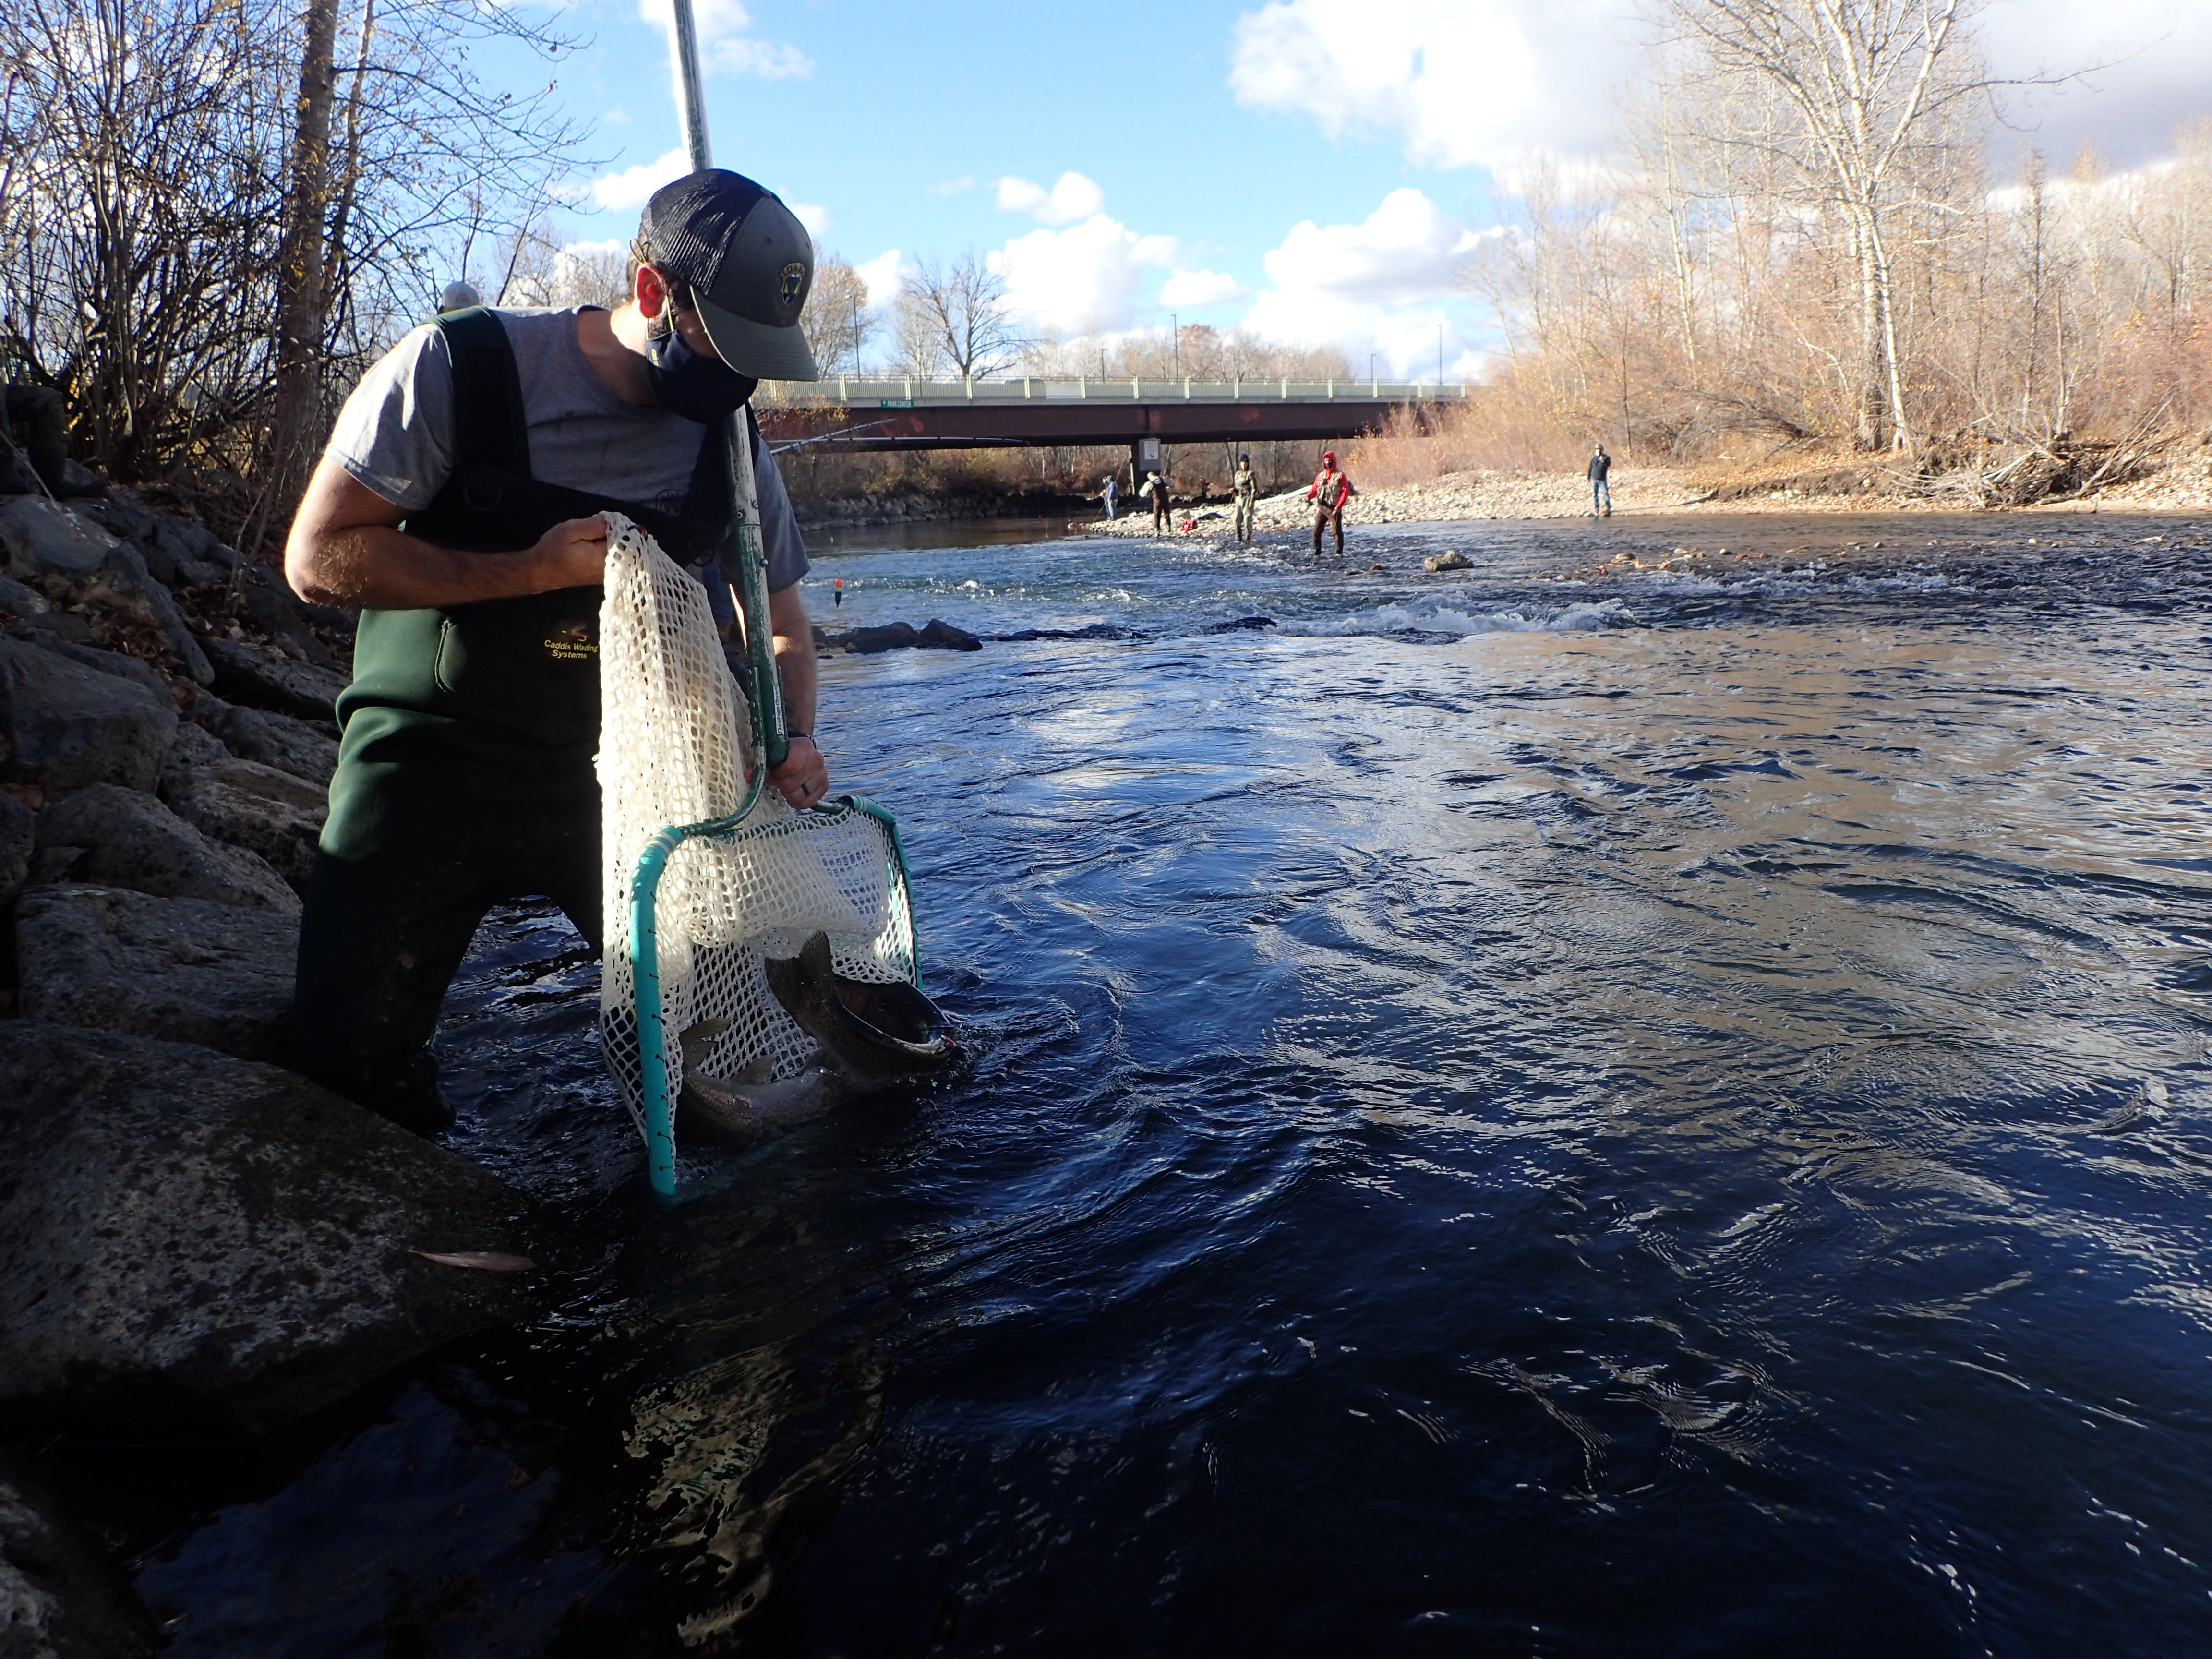 Catching steelhead in Idaho's capital city, survey shows anglers